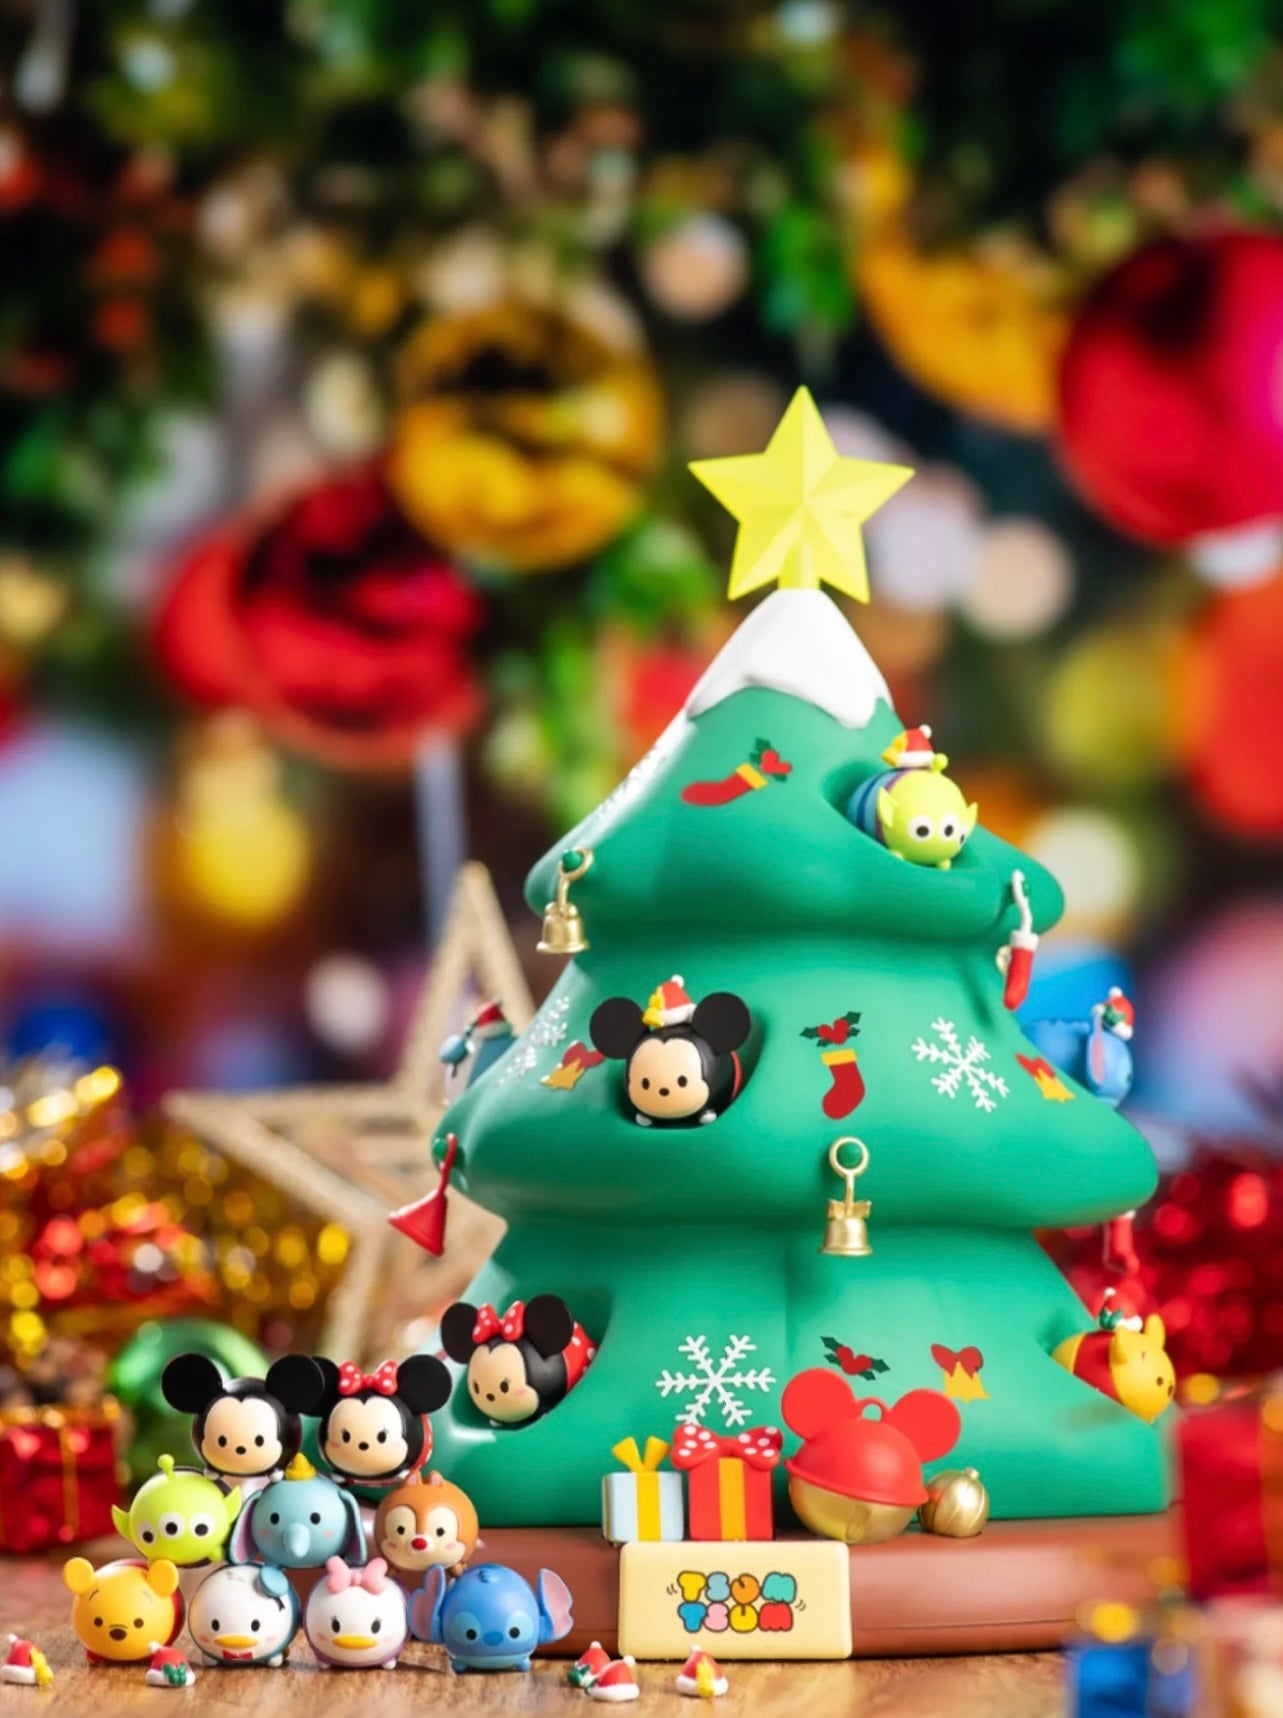 [MGLTOYS] TSUM TSUM - Christmas Tree Night Light Art Toy